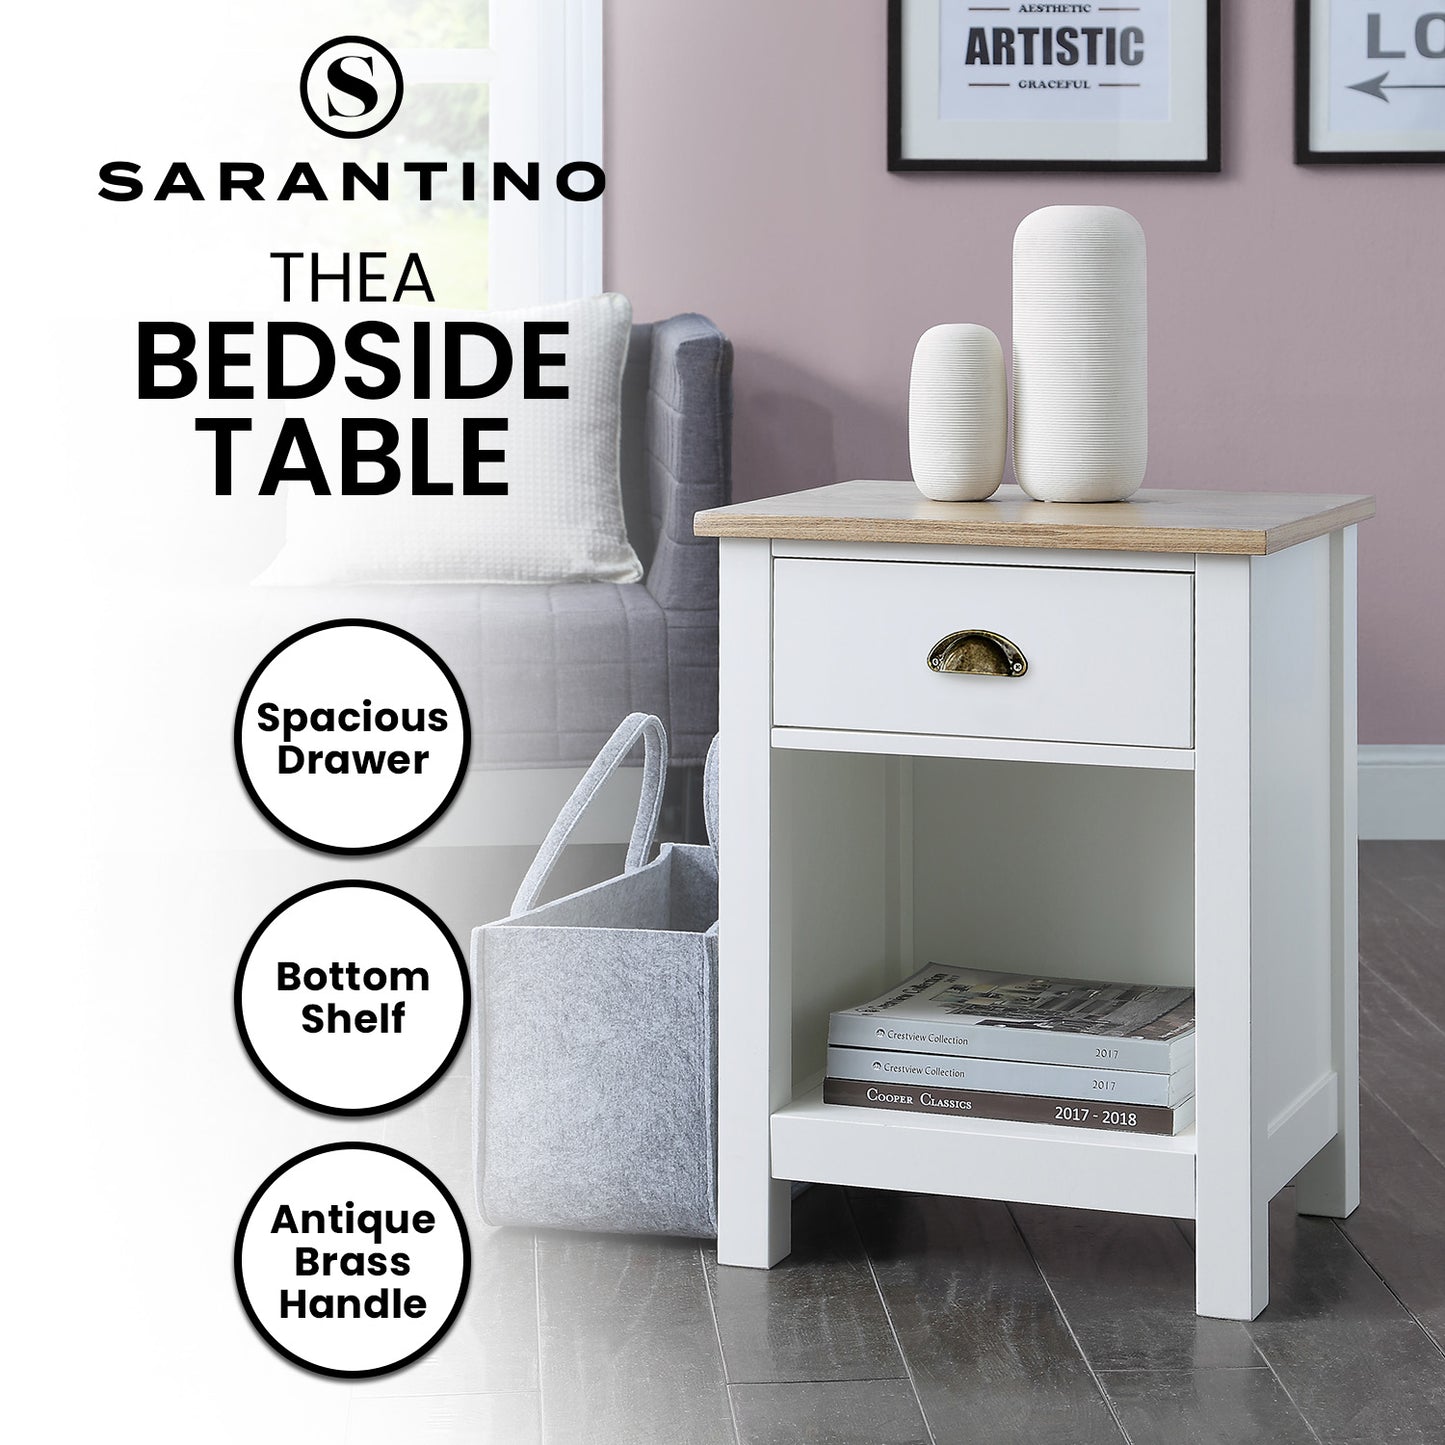 Sarantino Thea Bedside Table - White/Natural